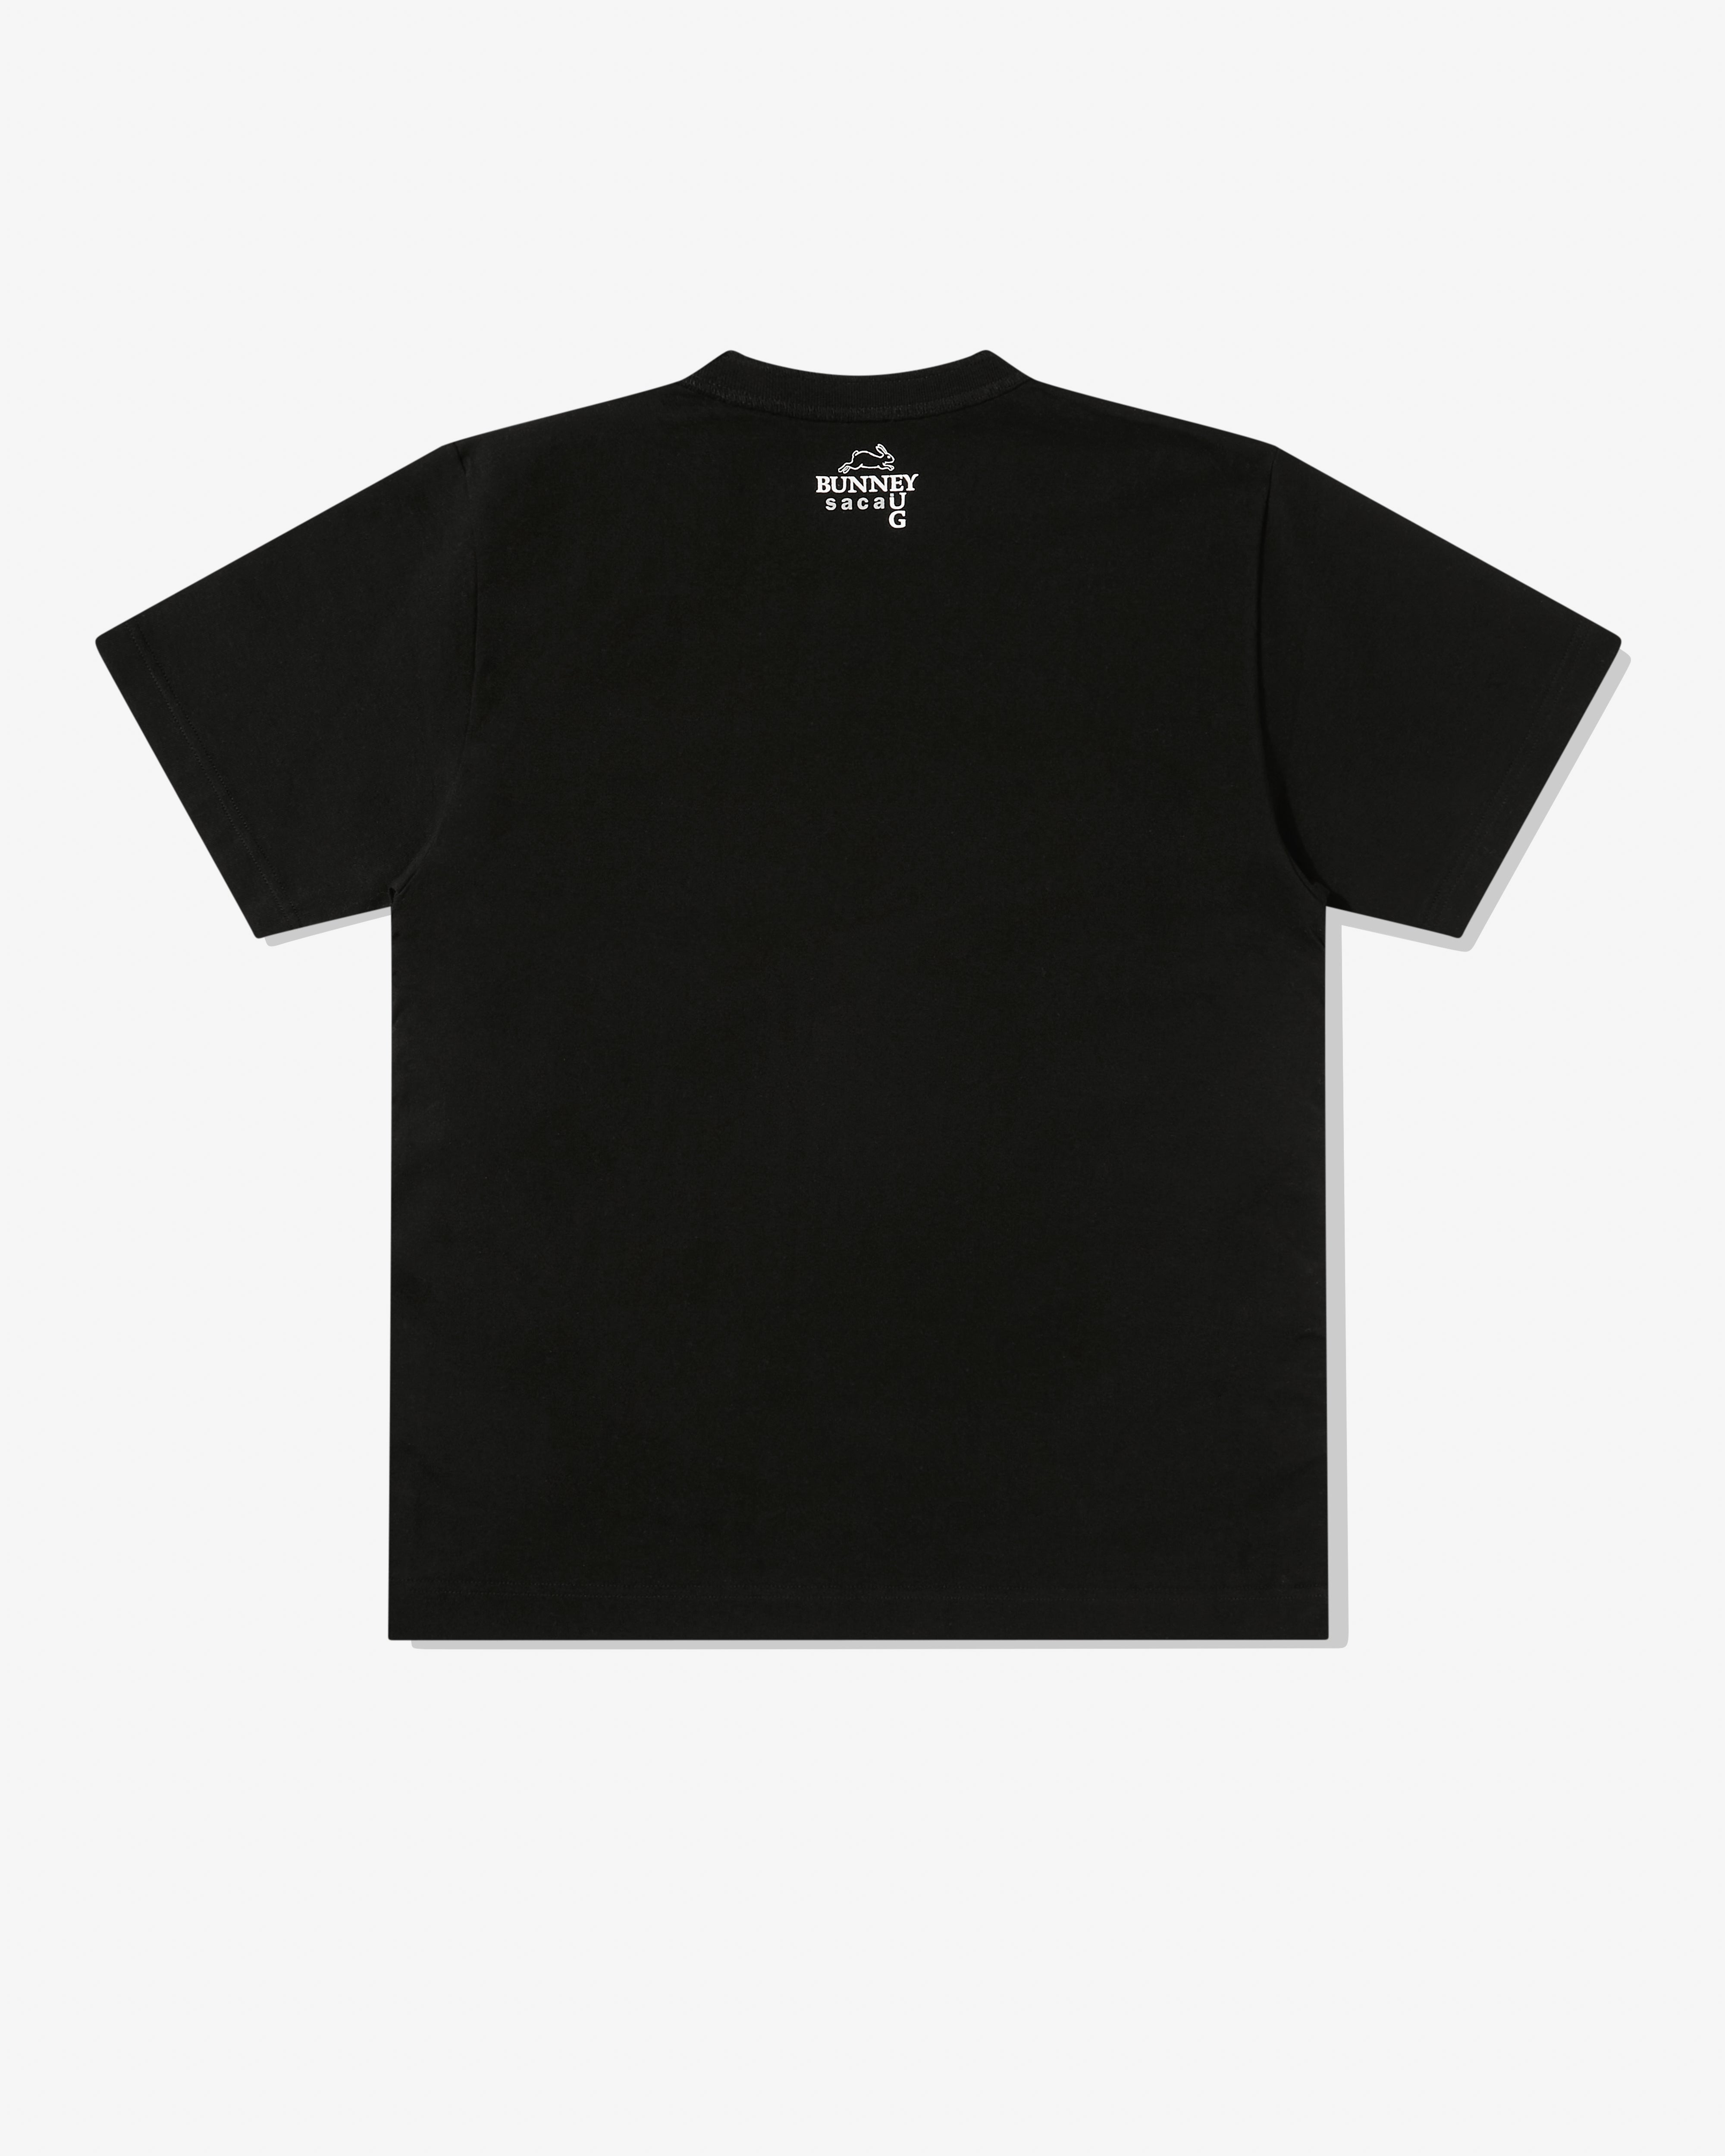 sacai - Bunney u0026 Eug Tulip Embroidered T-Shirt - (Black)